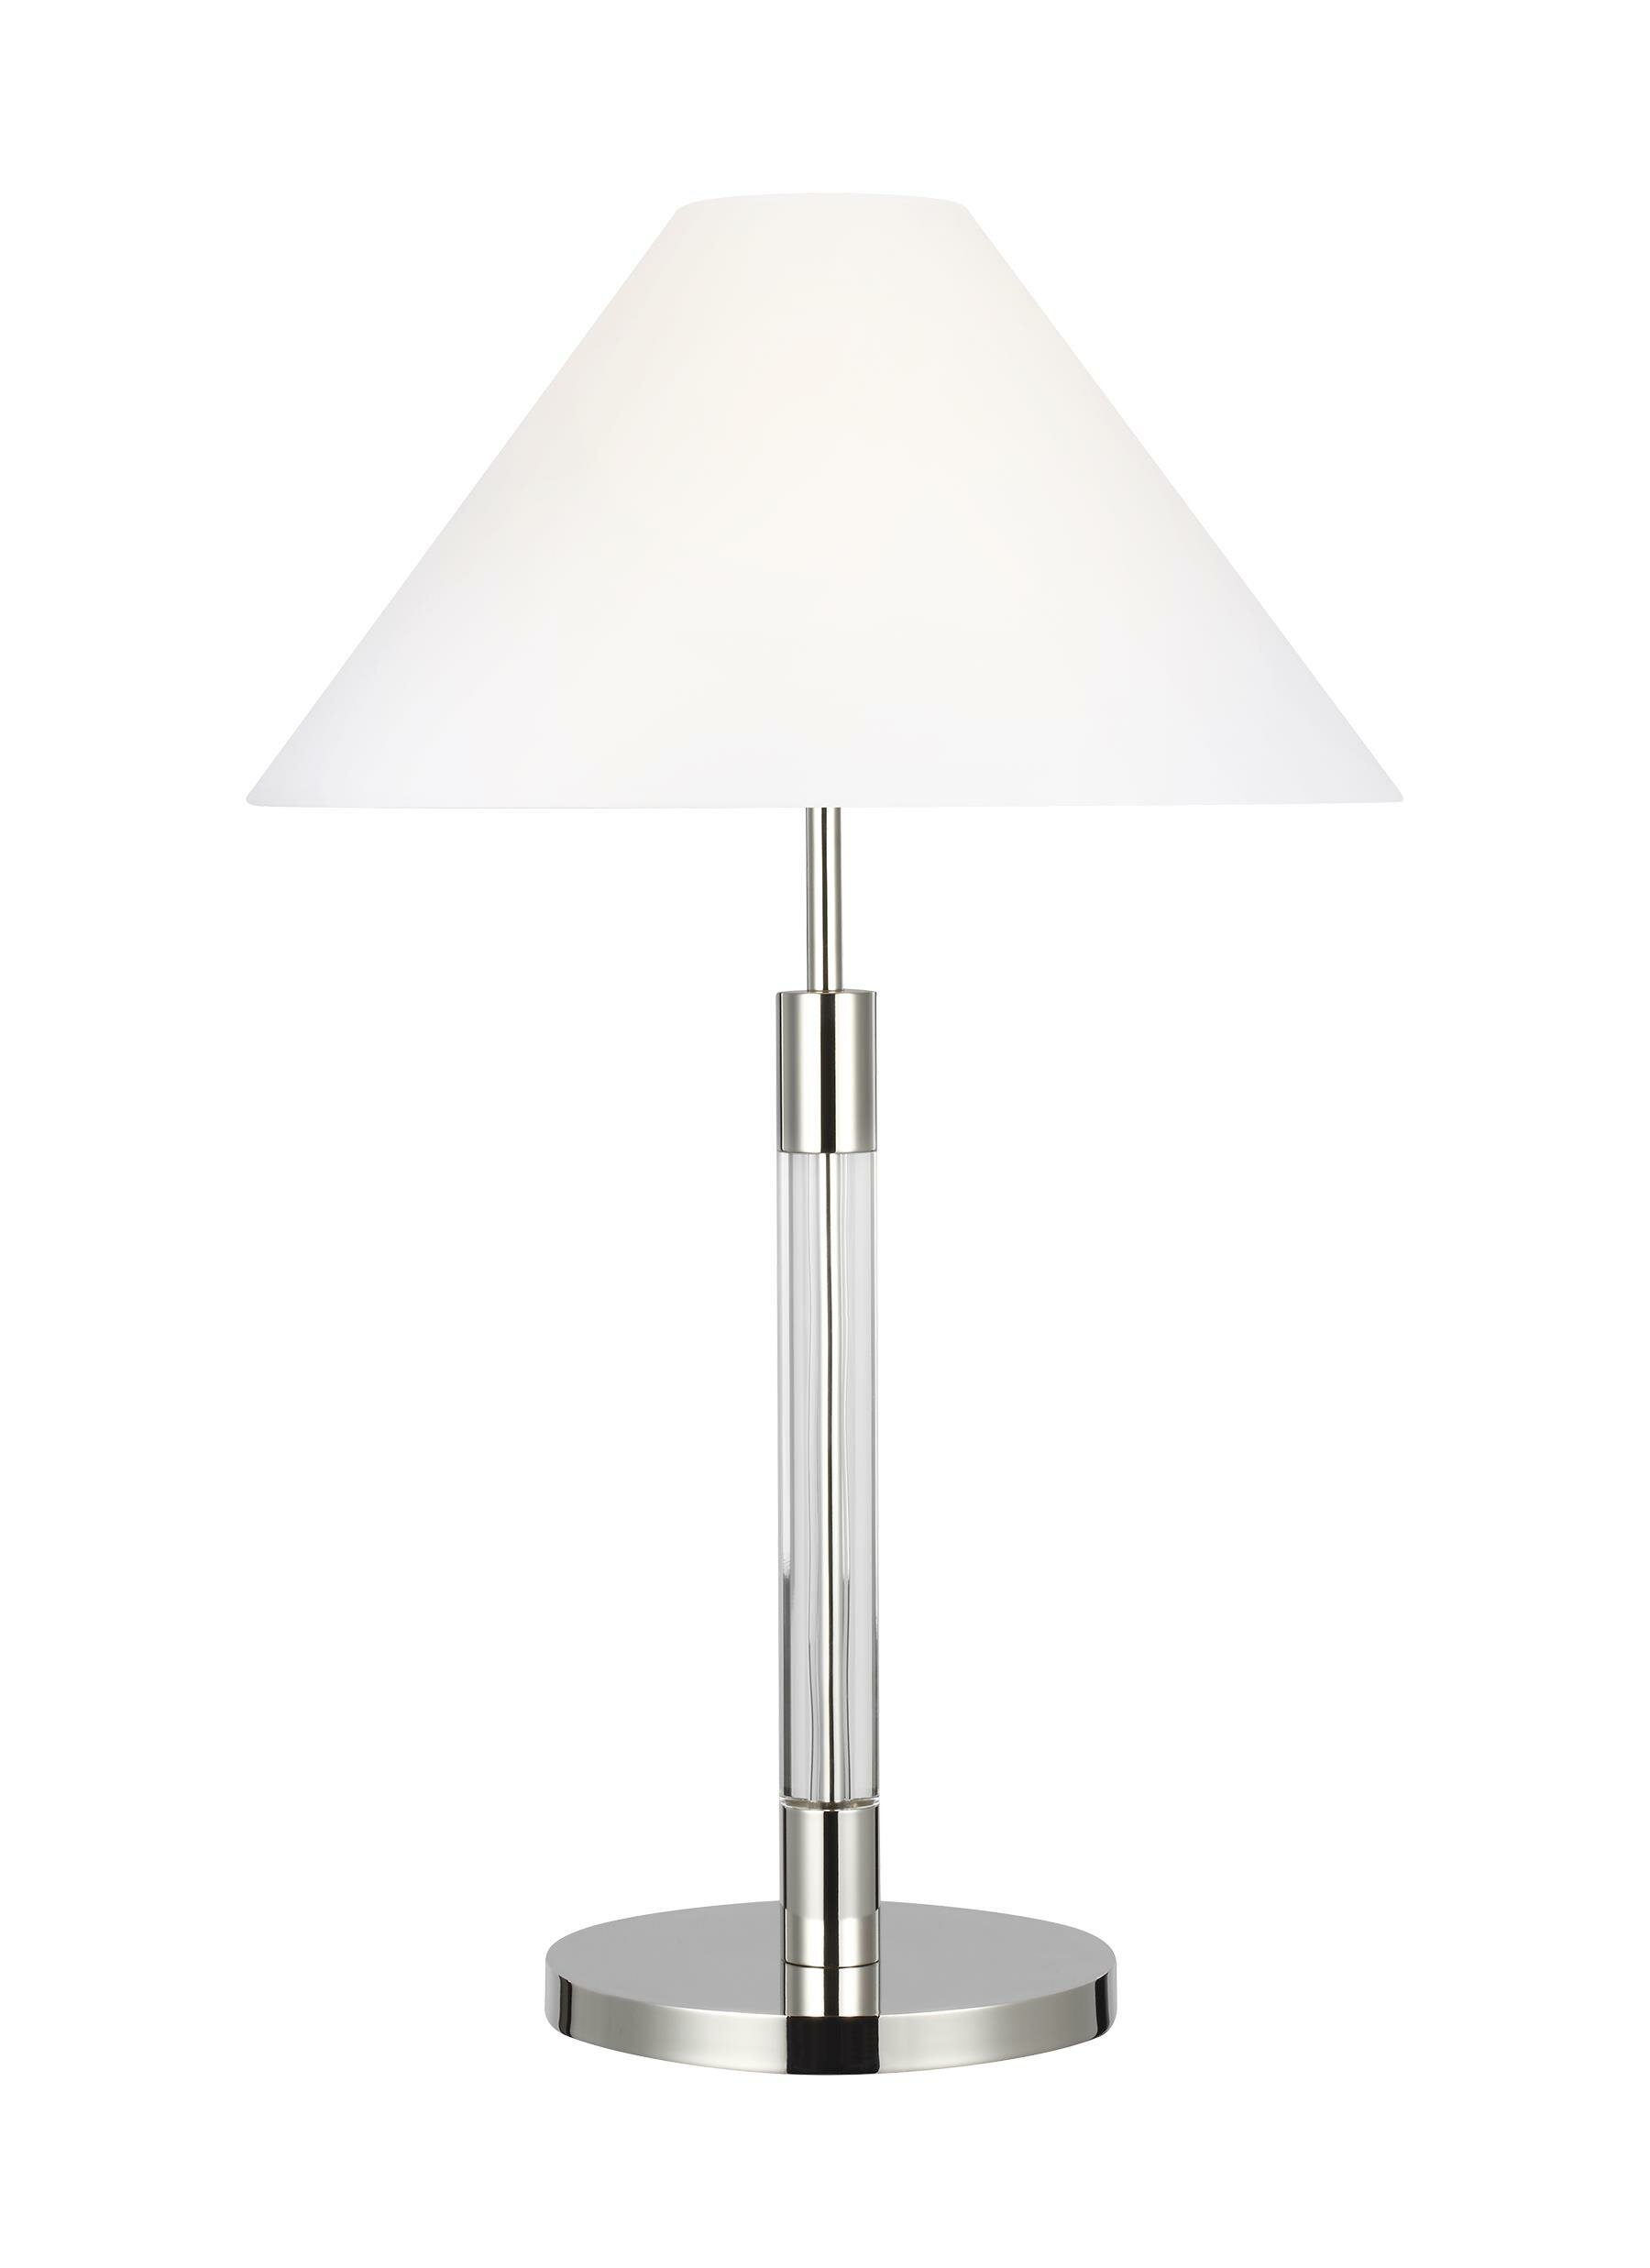 ralph lauren swing arm table lamp